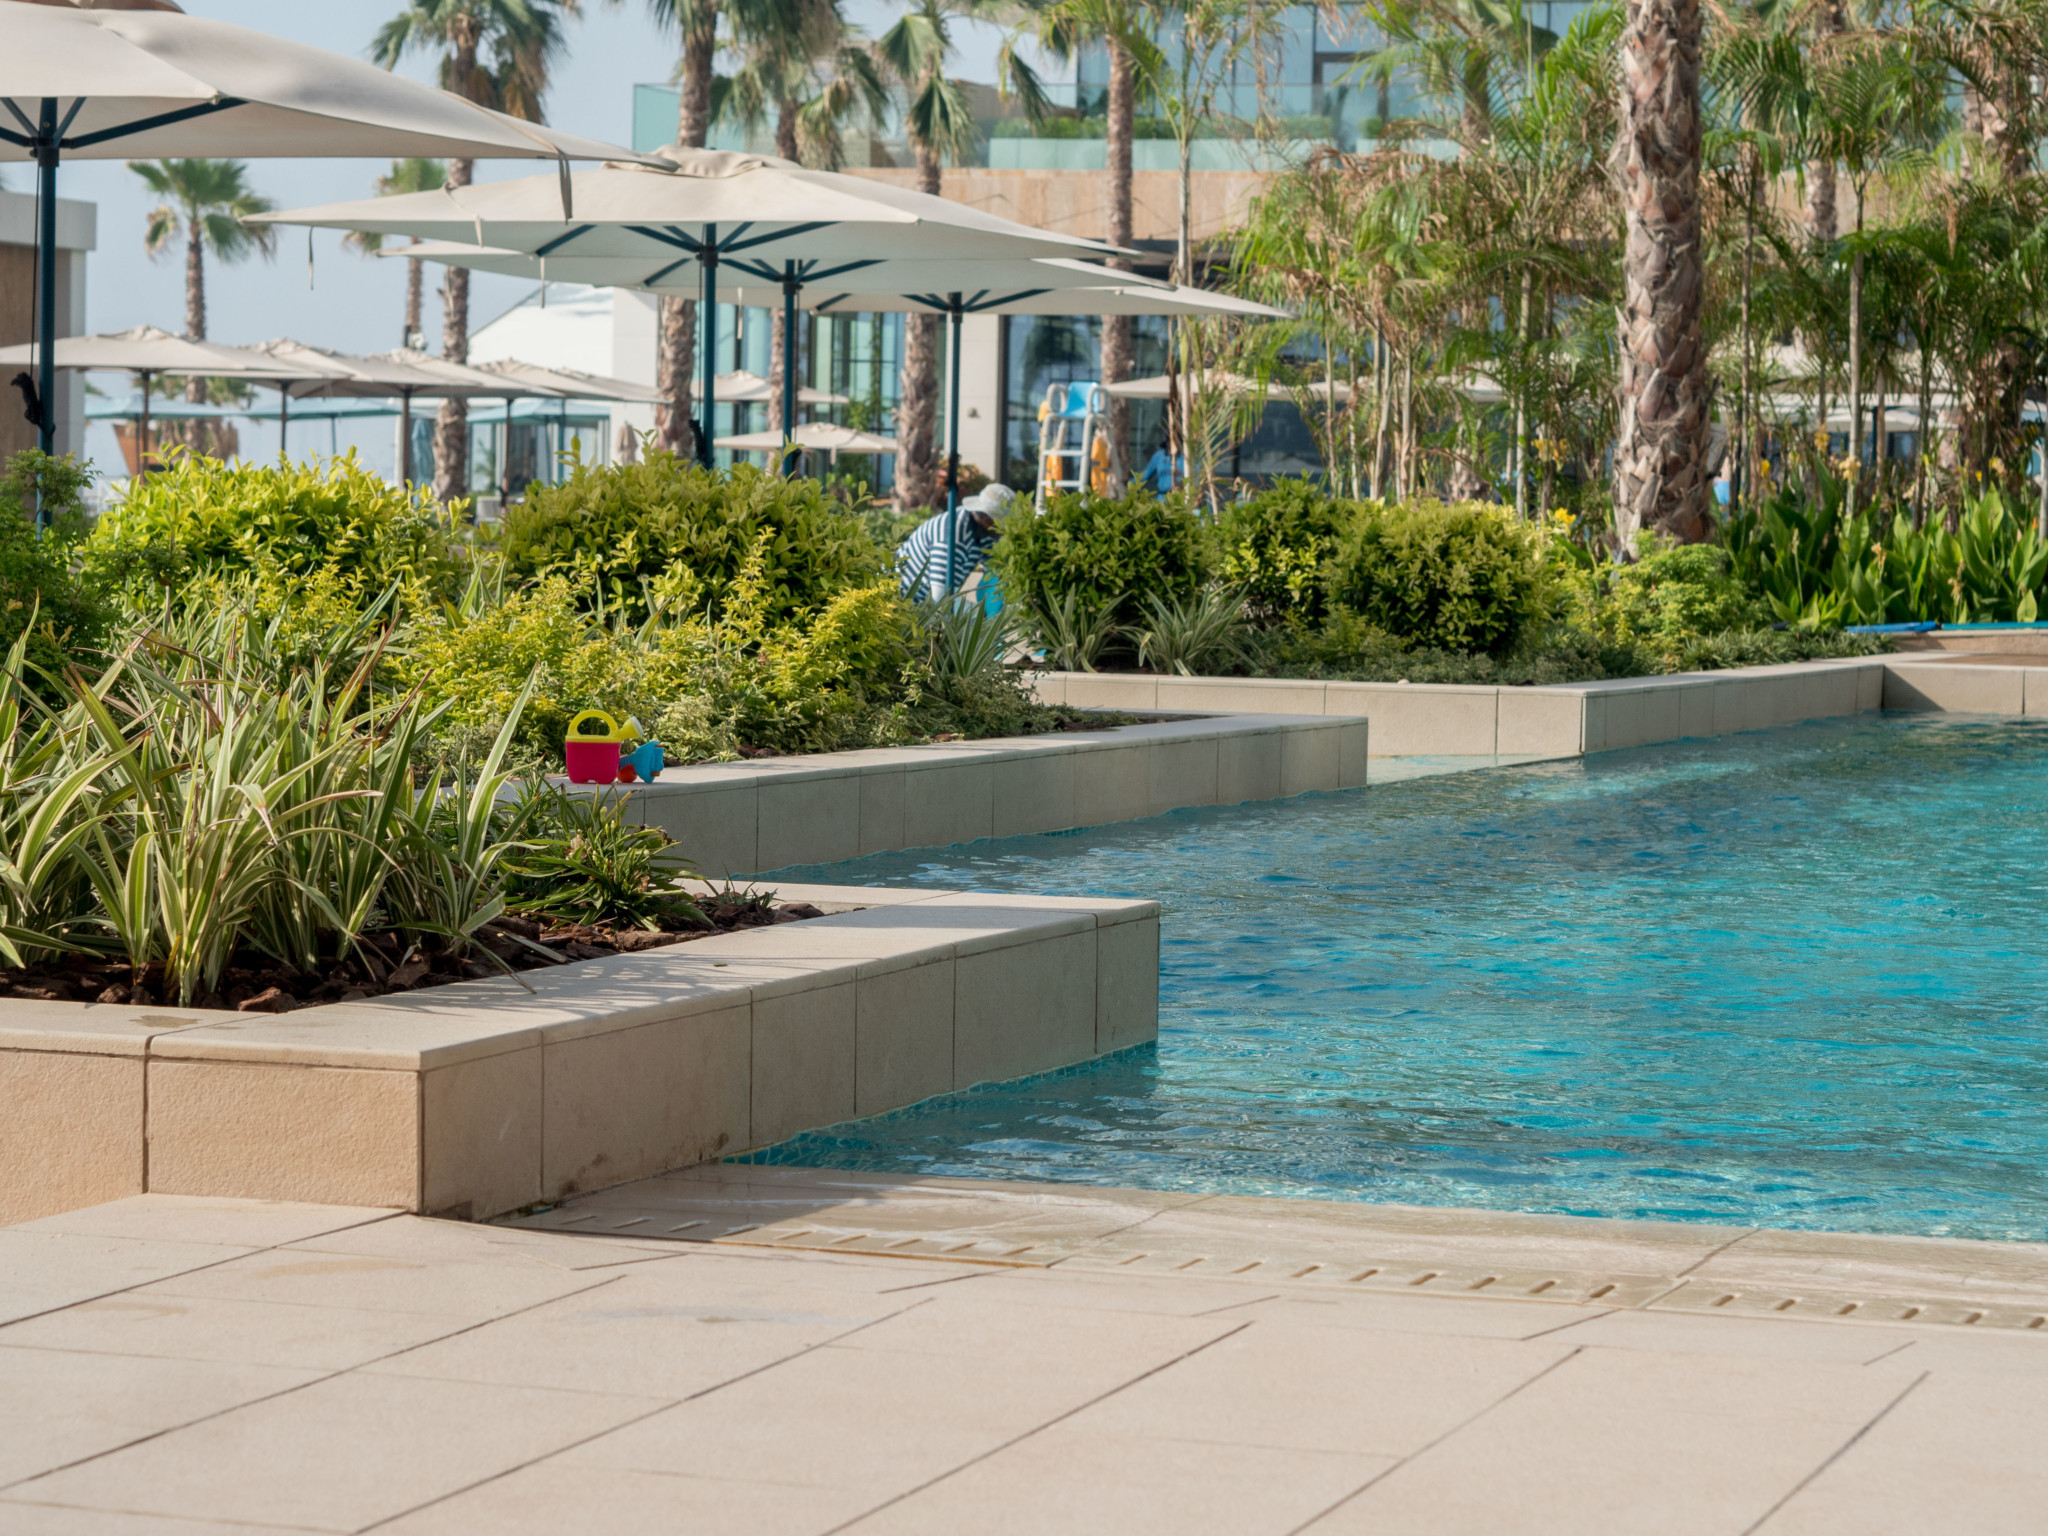 Mandarin Oriental Dubai swimming pool area